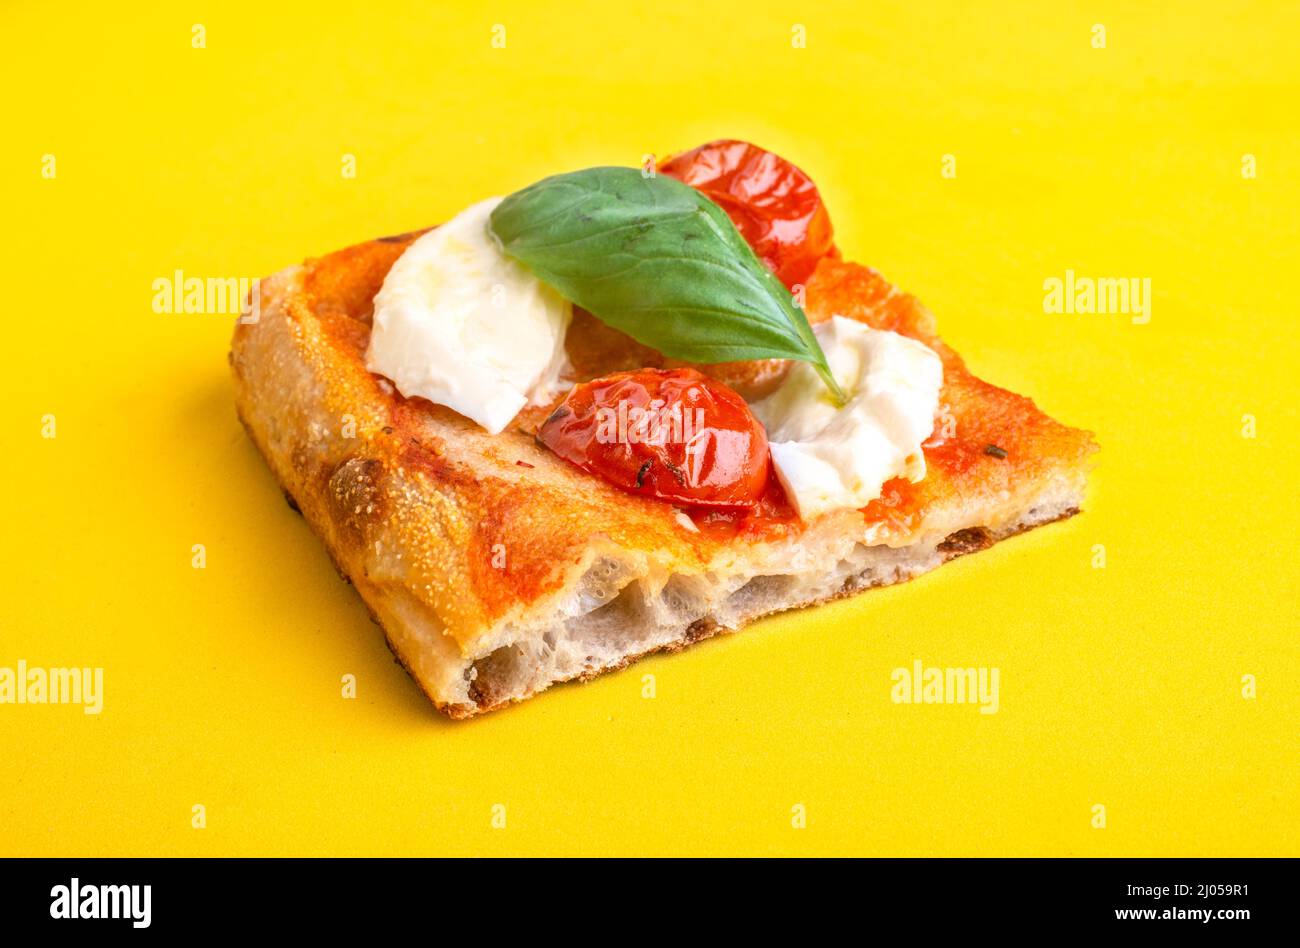 A piece of pizza al taglio with tomato and mozzarella isolated on yellow background Stock Photo